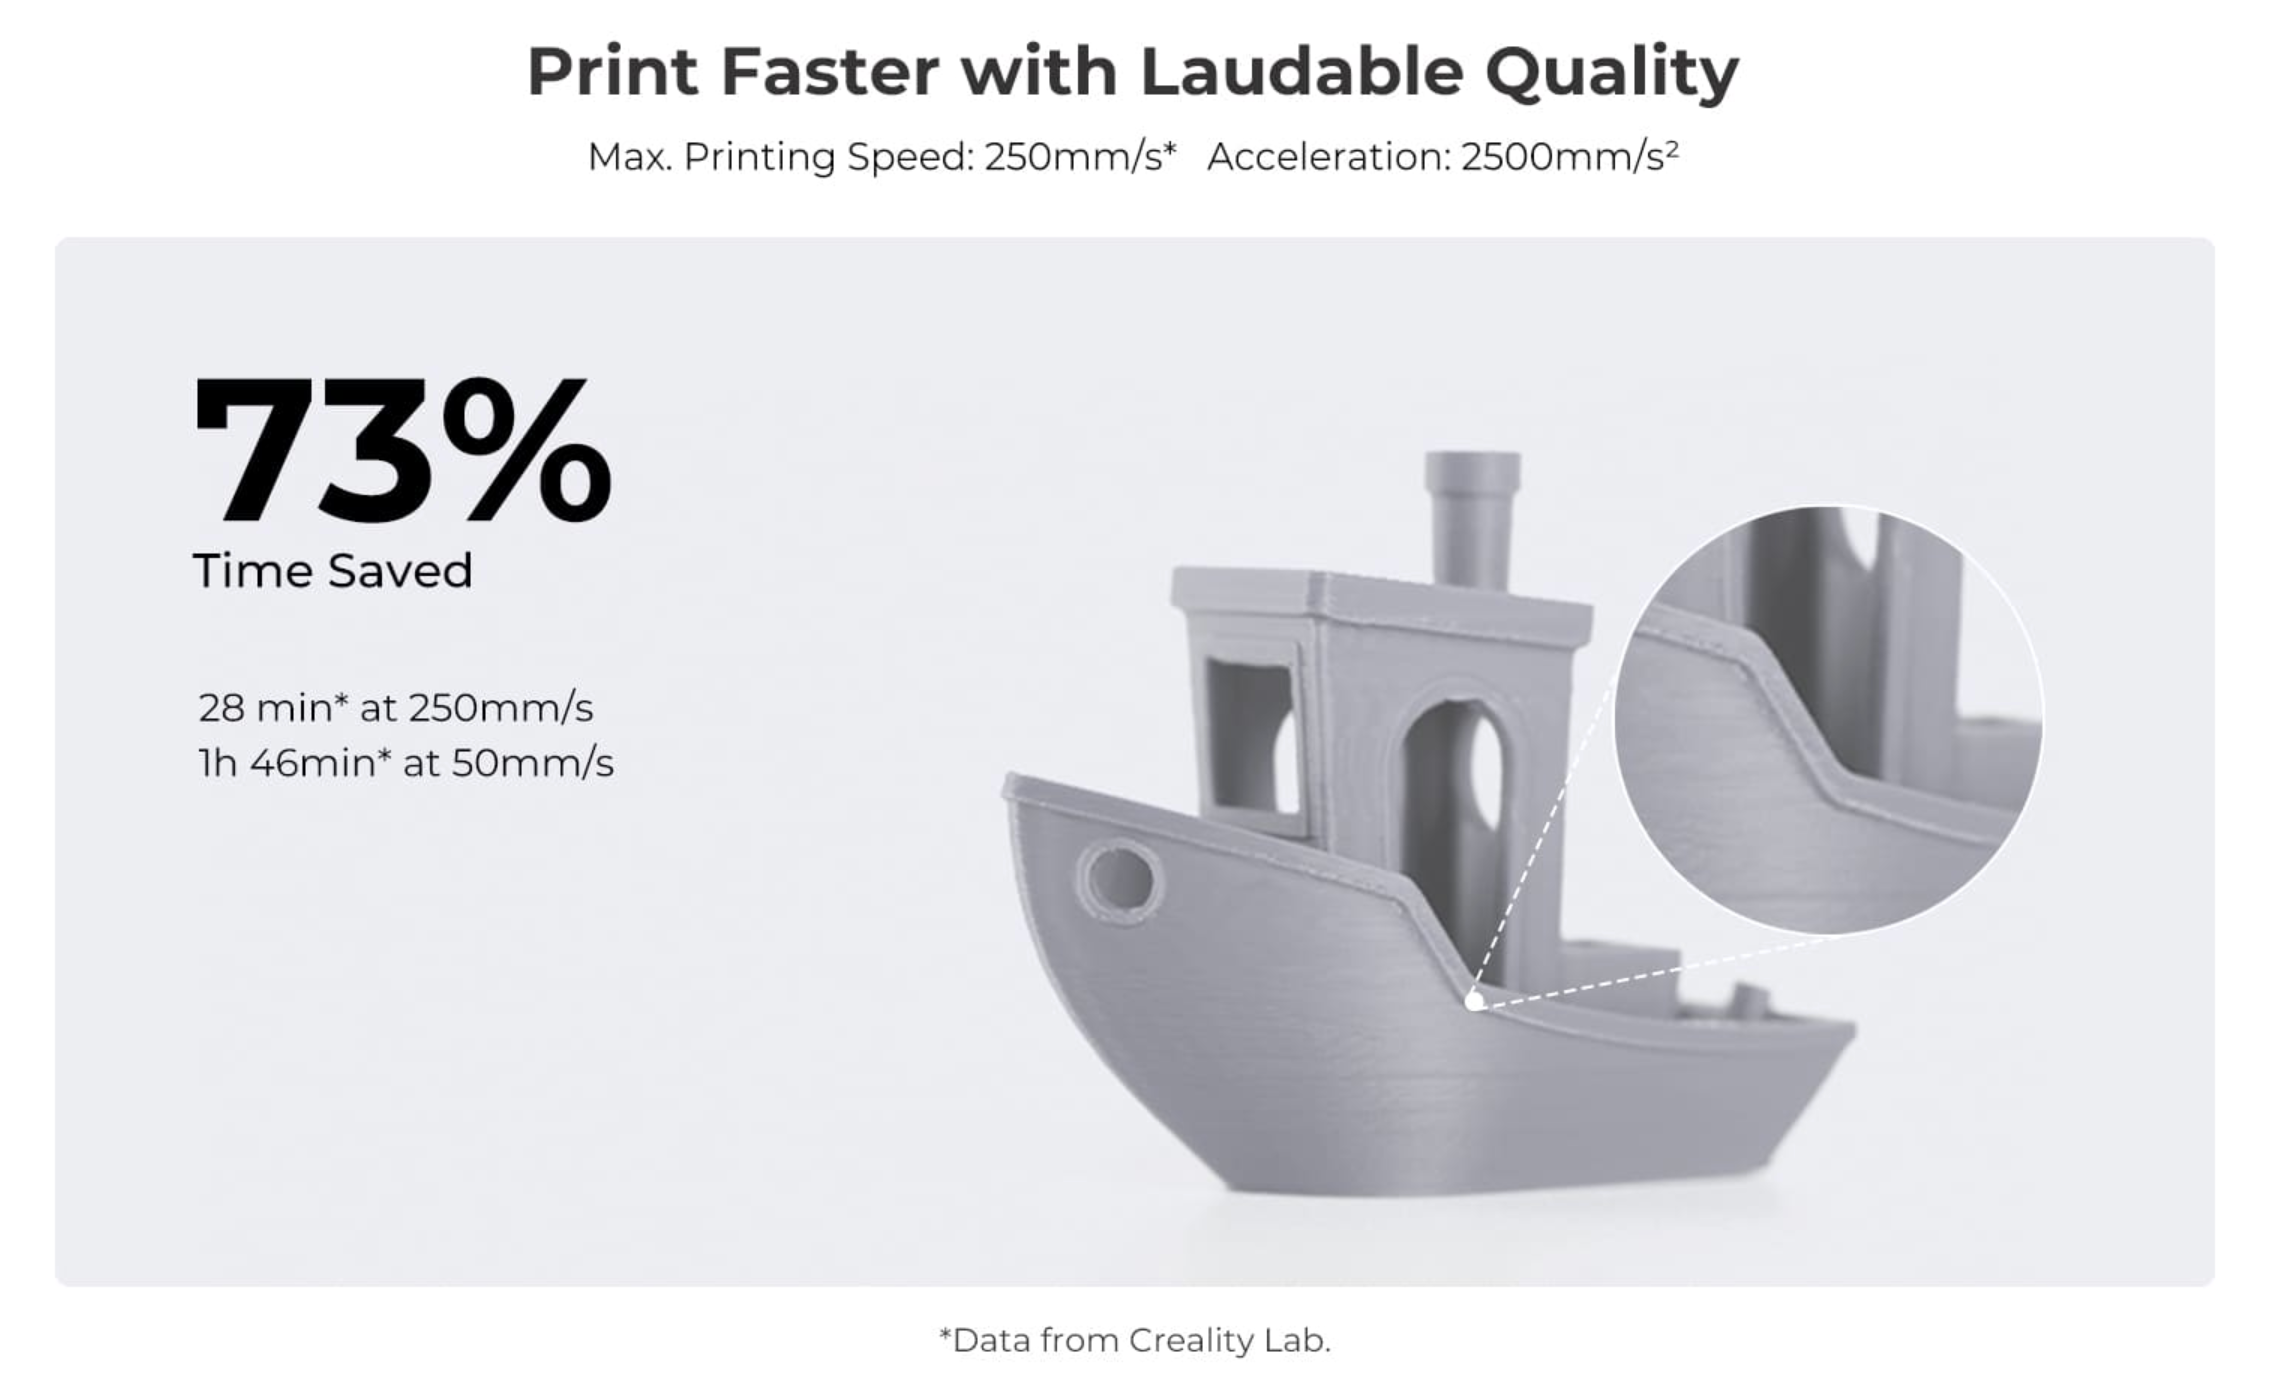 Budget & Beginner Friendly 3D Printer Only $200 - Creality Ender 3 V3 SE 